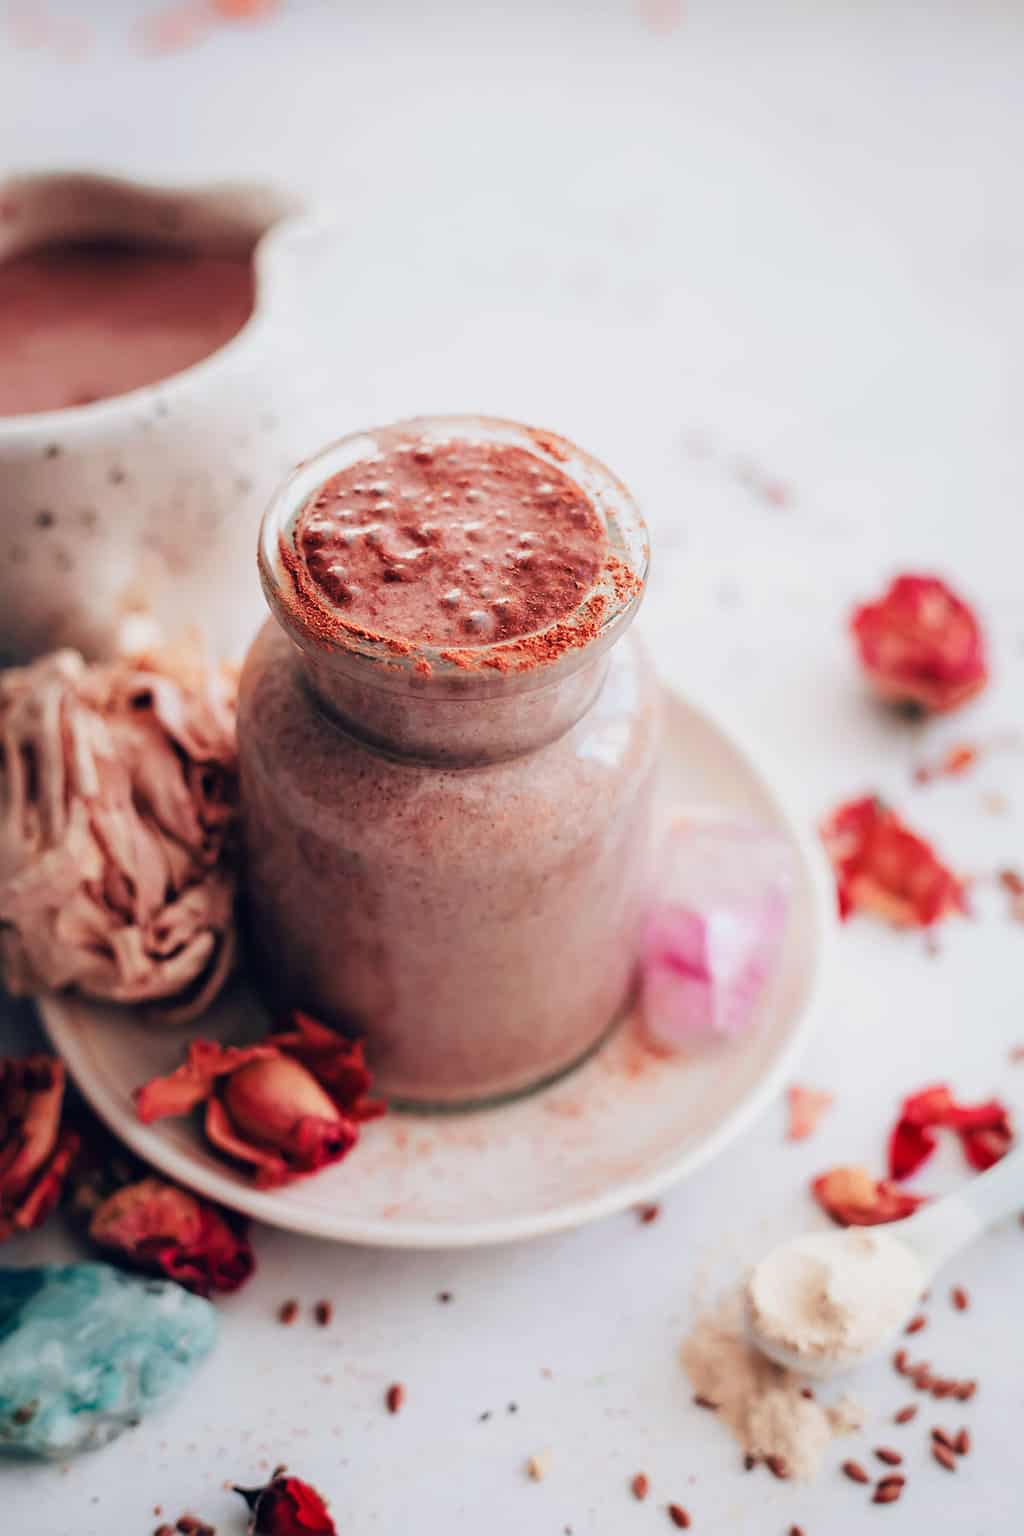 Chocolate Milk with Flax Seeds and Maca